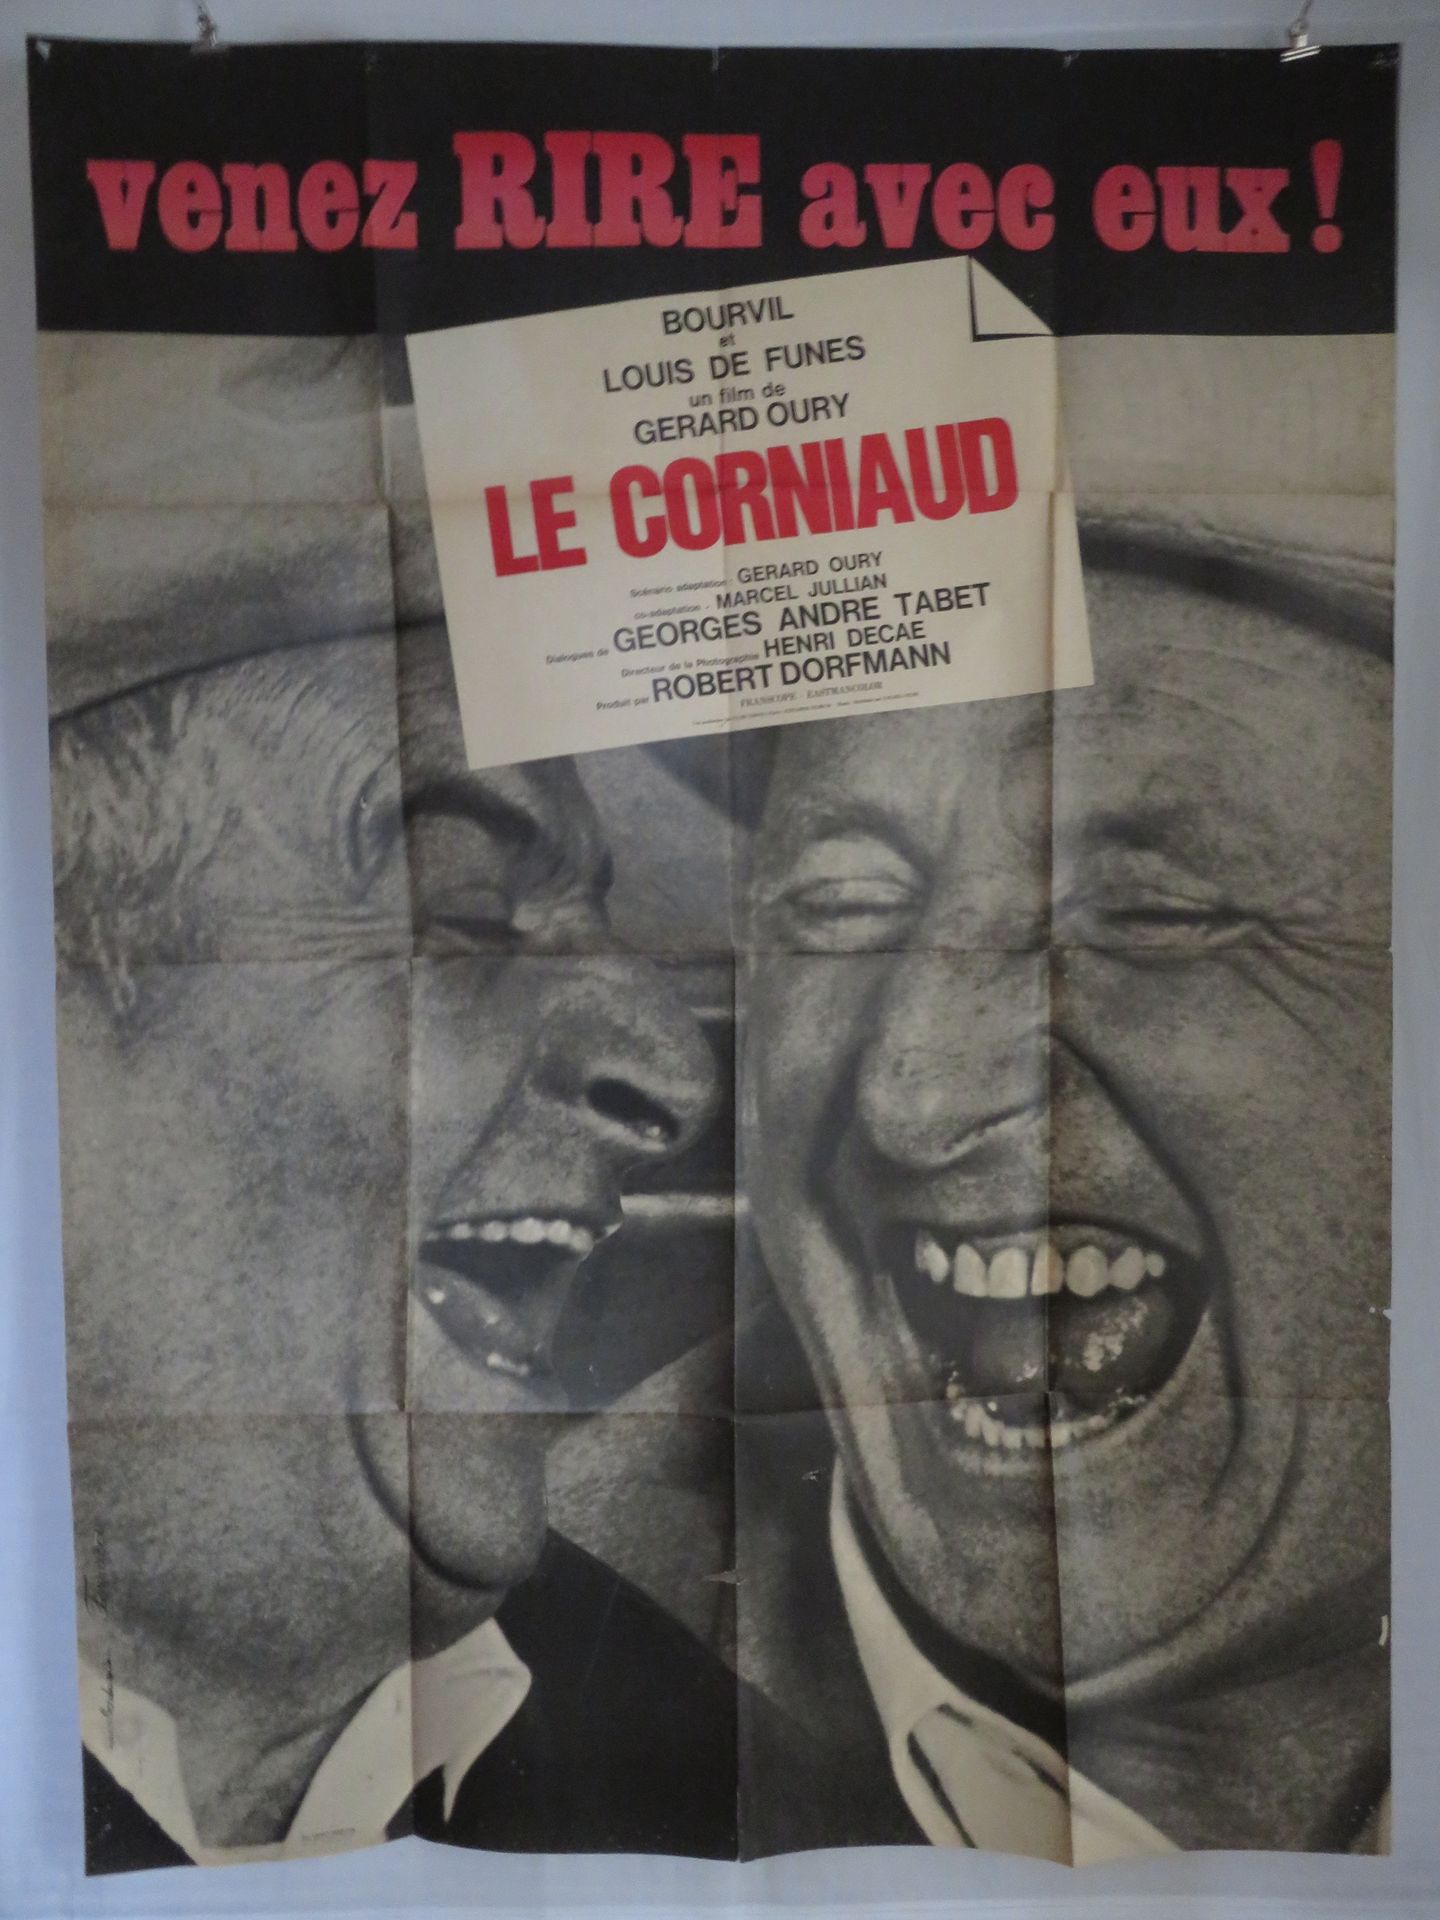 Null "LE CORNIAUD" (1964) von Gerard OURY mit Louis de Funès, Bourvil - Illustri&hellip;